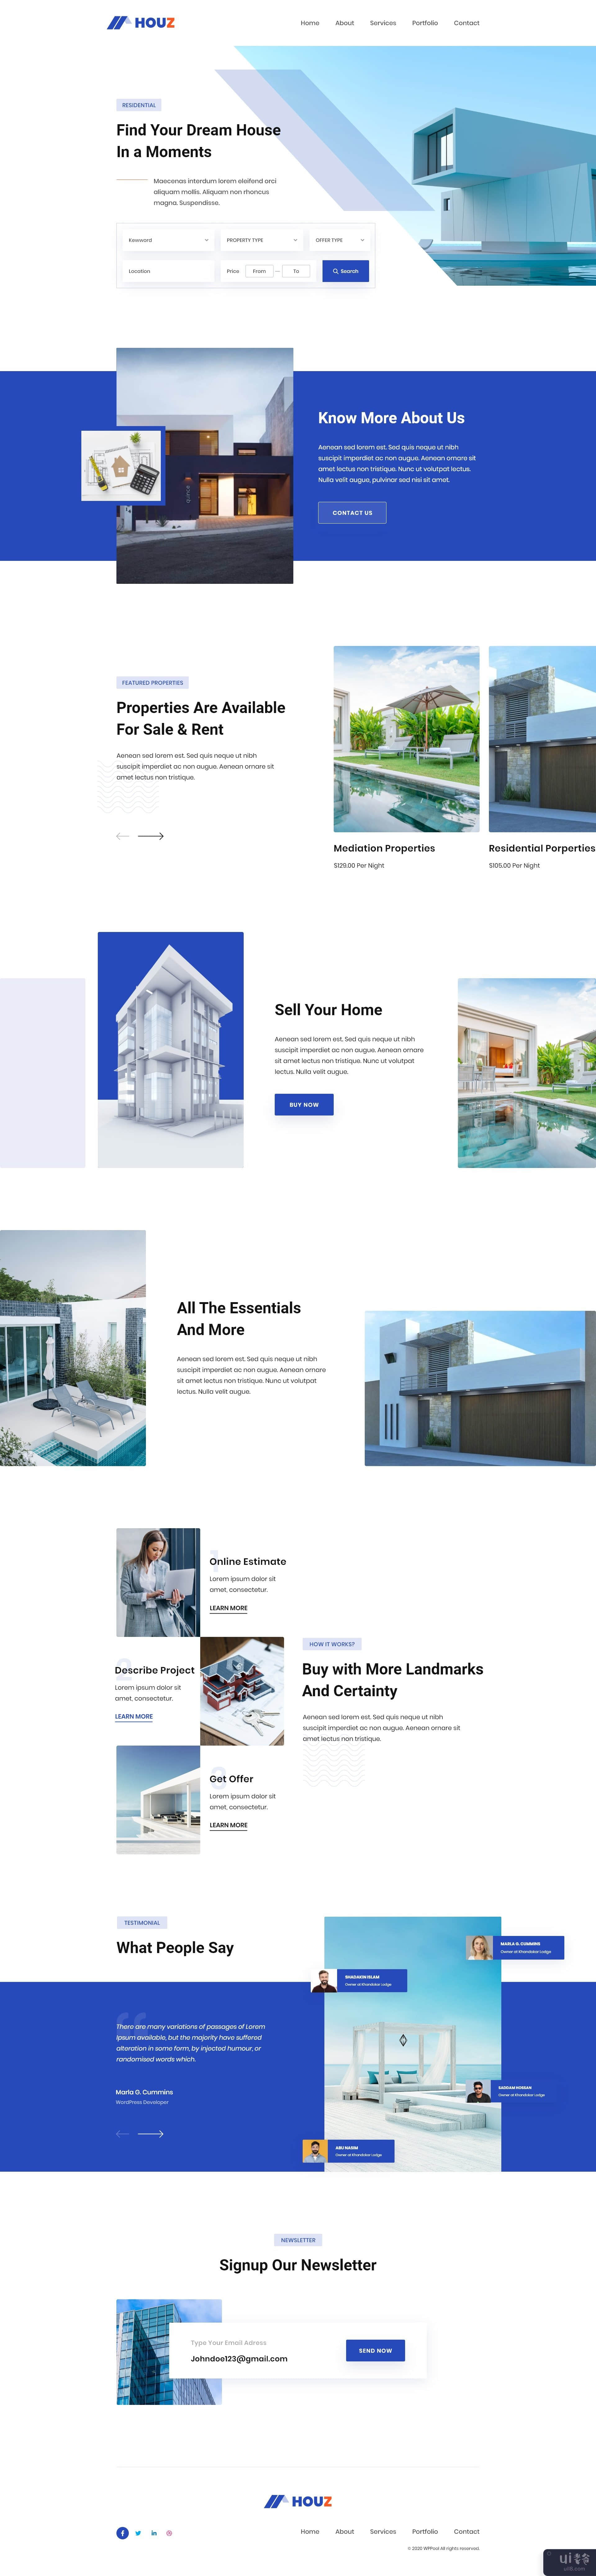 Houz房地产登陆页面(Houz Real Estate Landing Page)插图